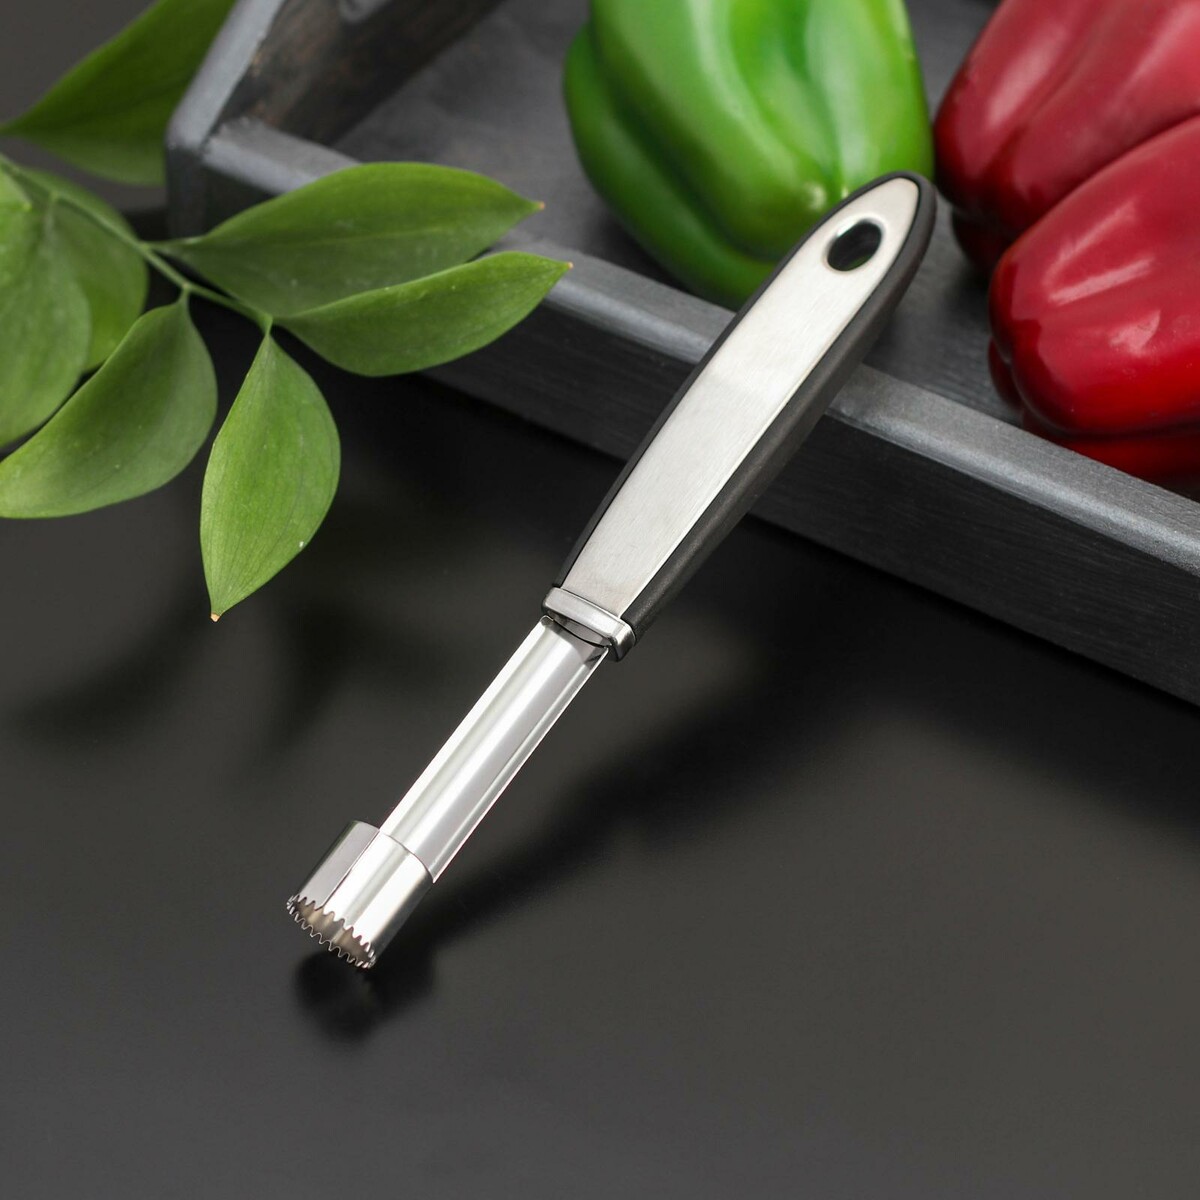 Нож для сердцевины доляна blade, 21 см, ручка soft-touch, цвет черный emergency spare key blade for 2019 2022 mazda m6 mx5 cx5 cx7 cx9 rx8 cx30 smart key blade